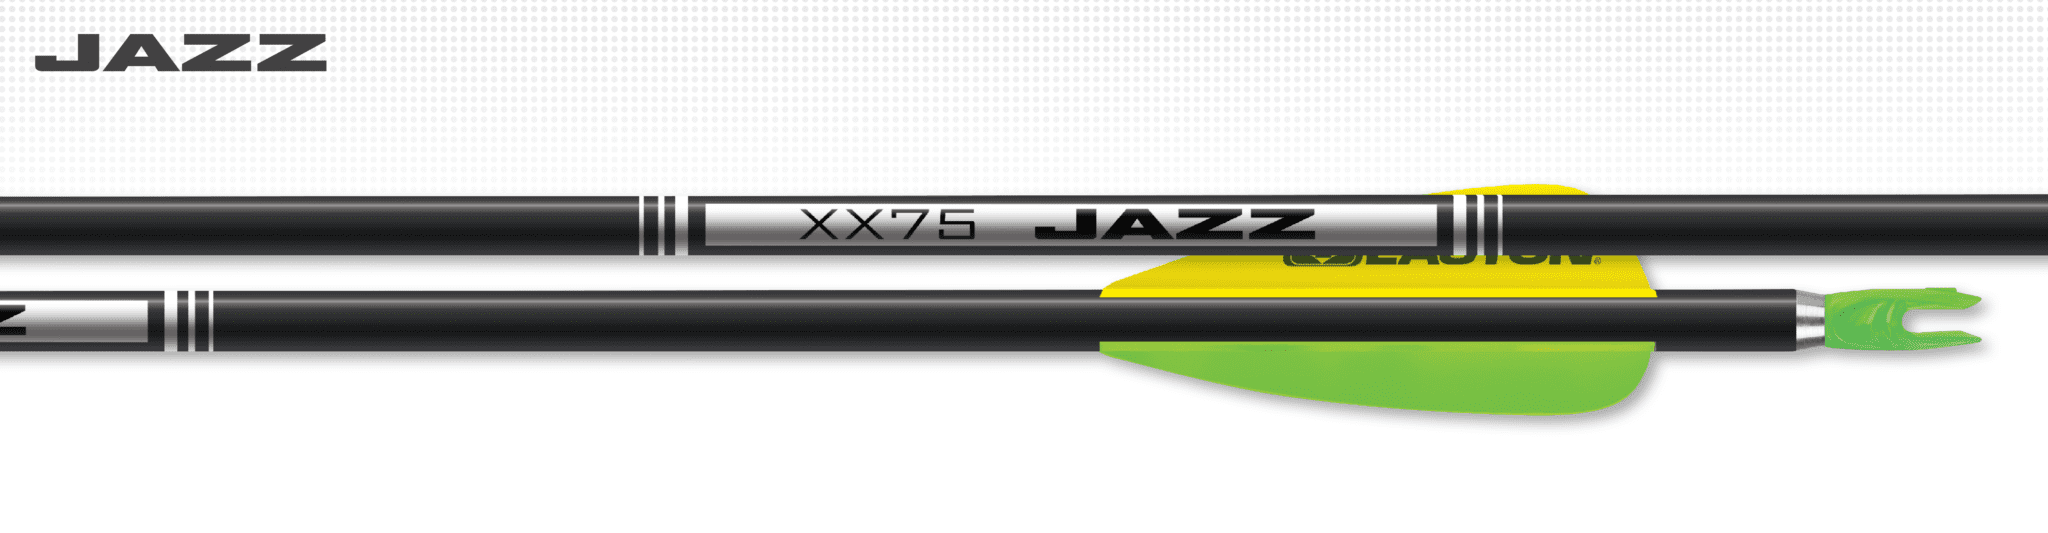 Easton XX75 Jazz Black Aluminium Fertigpfeil (12 Stk.)